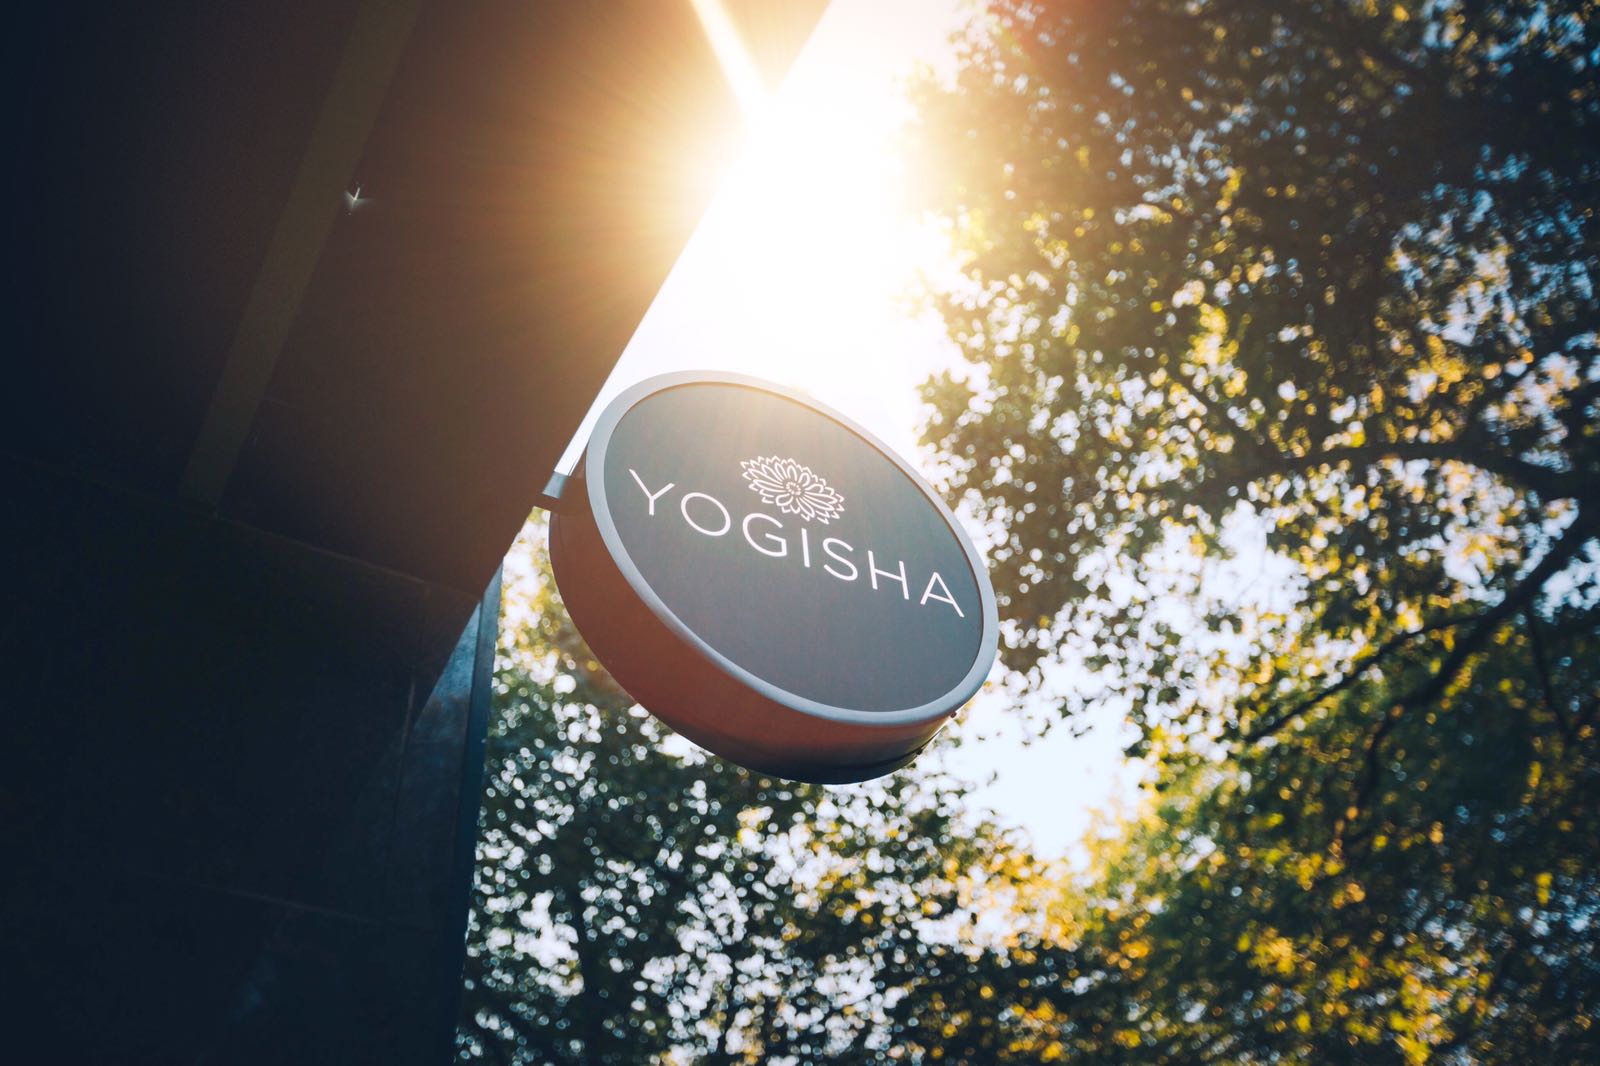 Yoga Großhandel und Meditation Großhandel - Yogashop